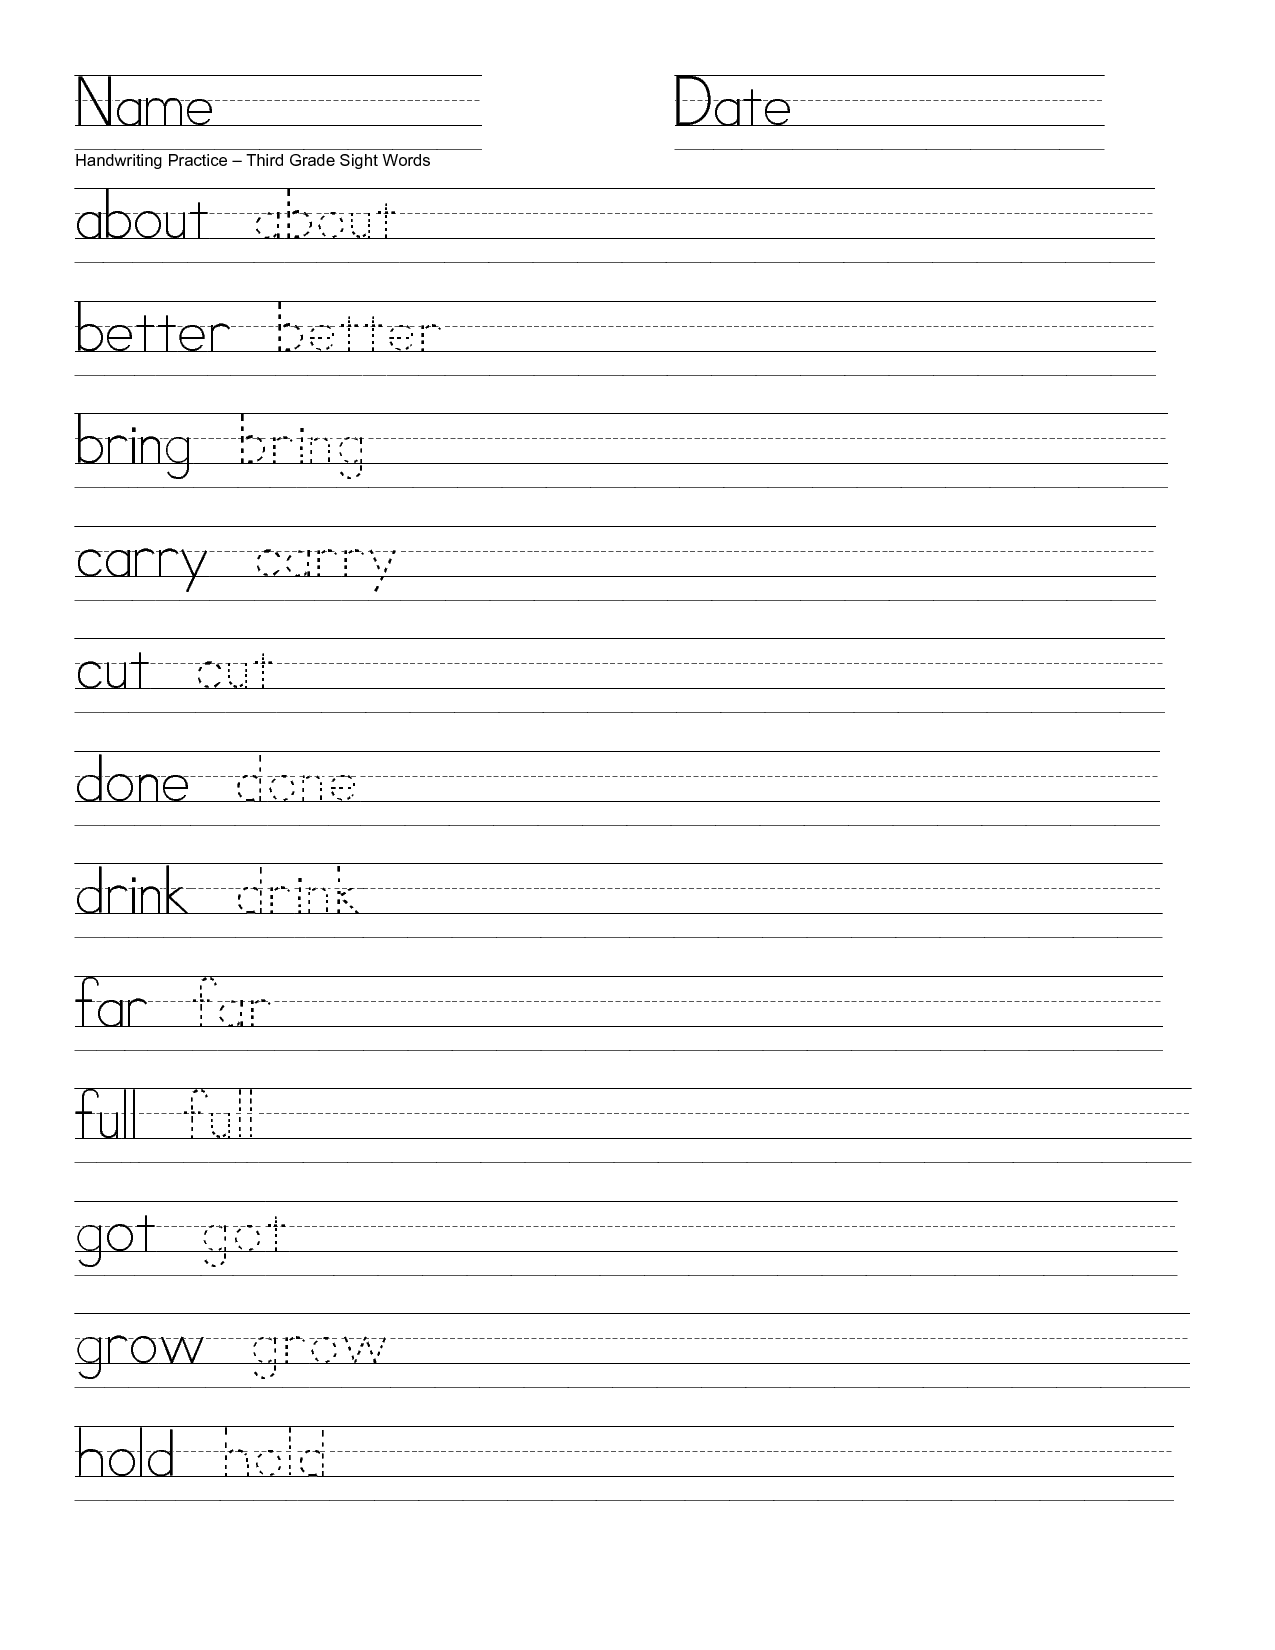 1st Grade Sight Word Handwriting Practice Worksheets Image